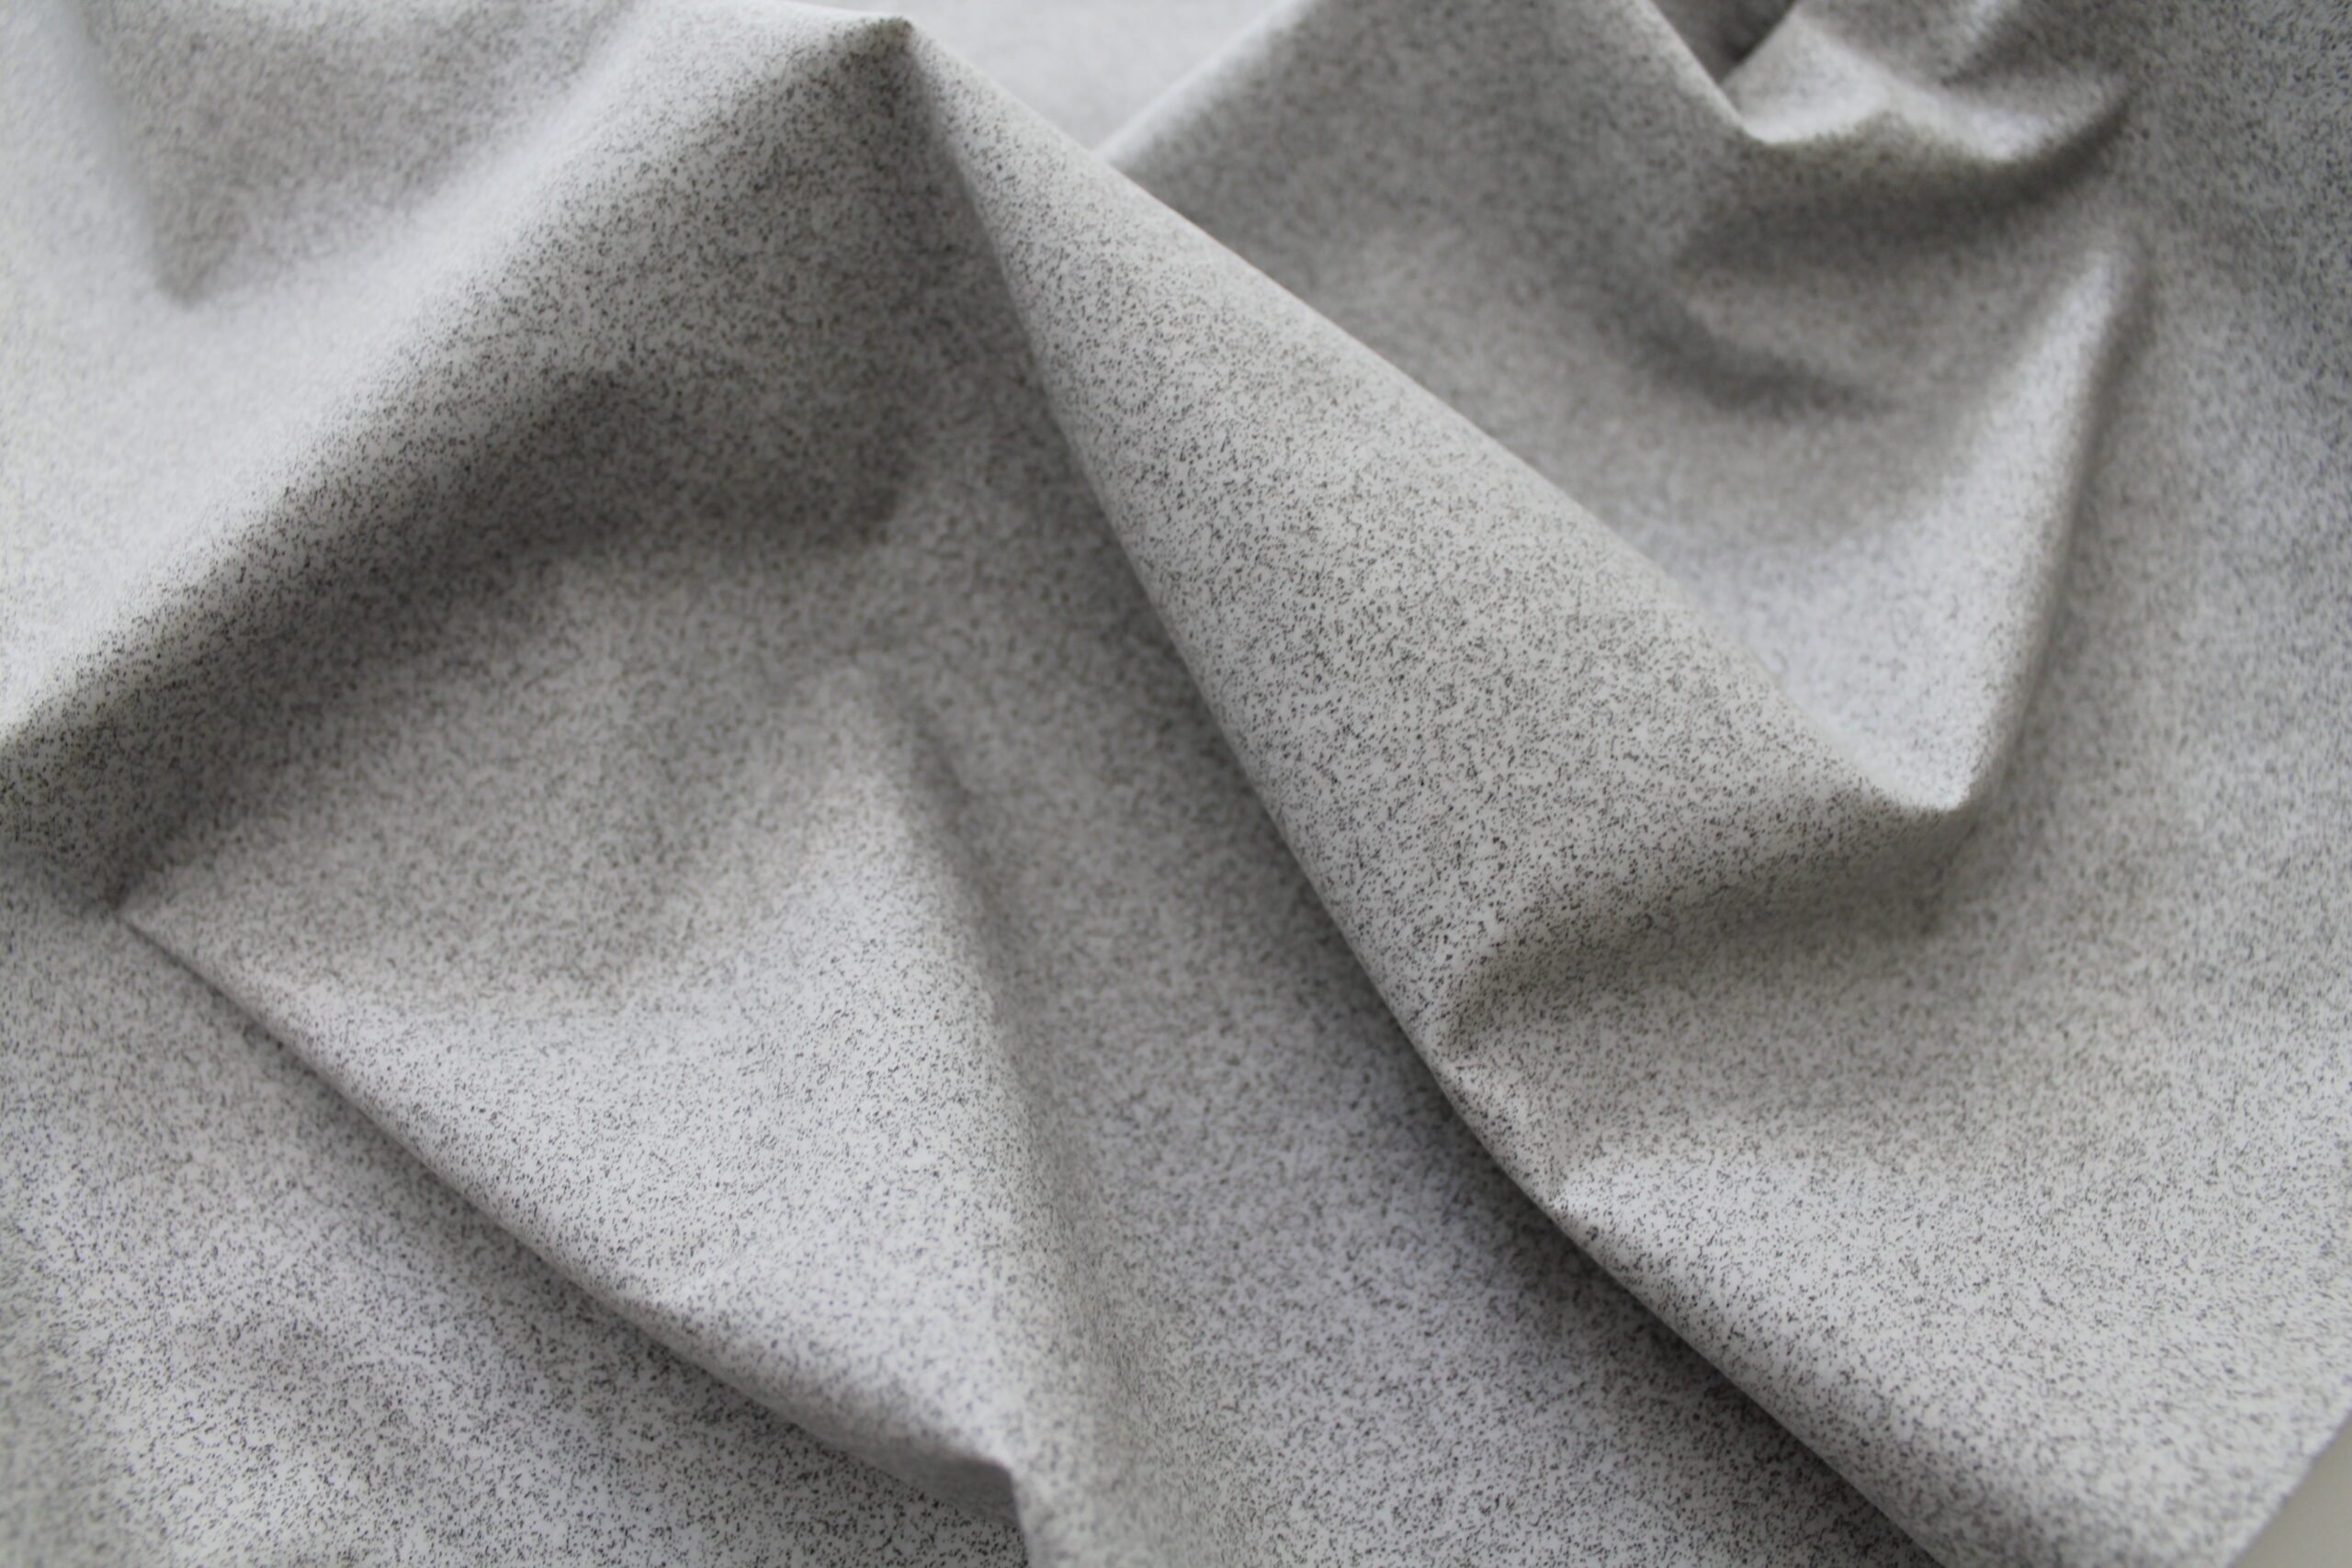 Fili Pari: marble dust become fabric